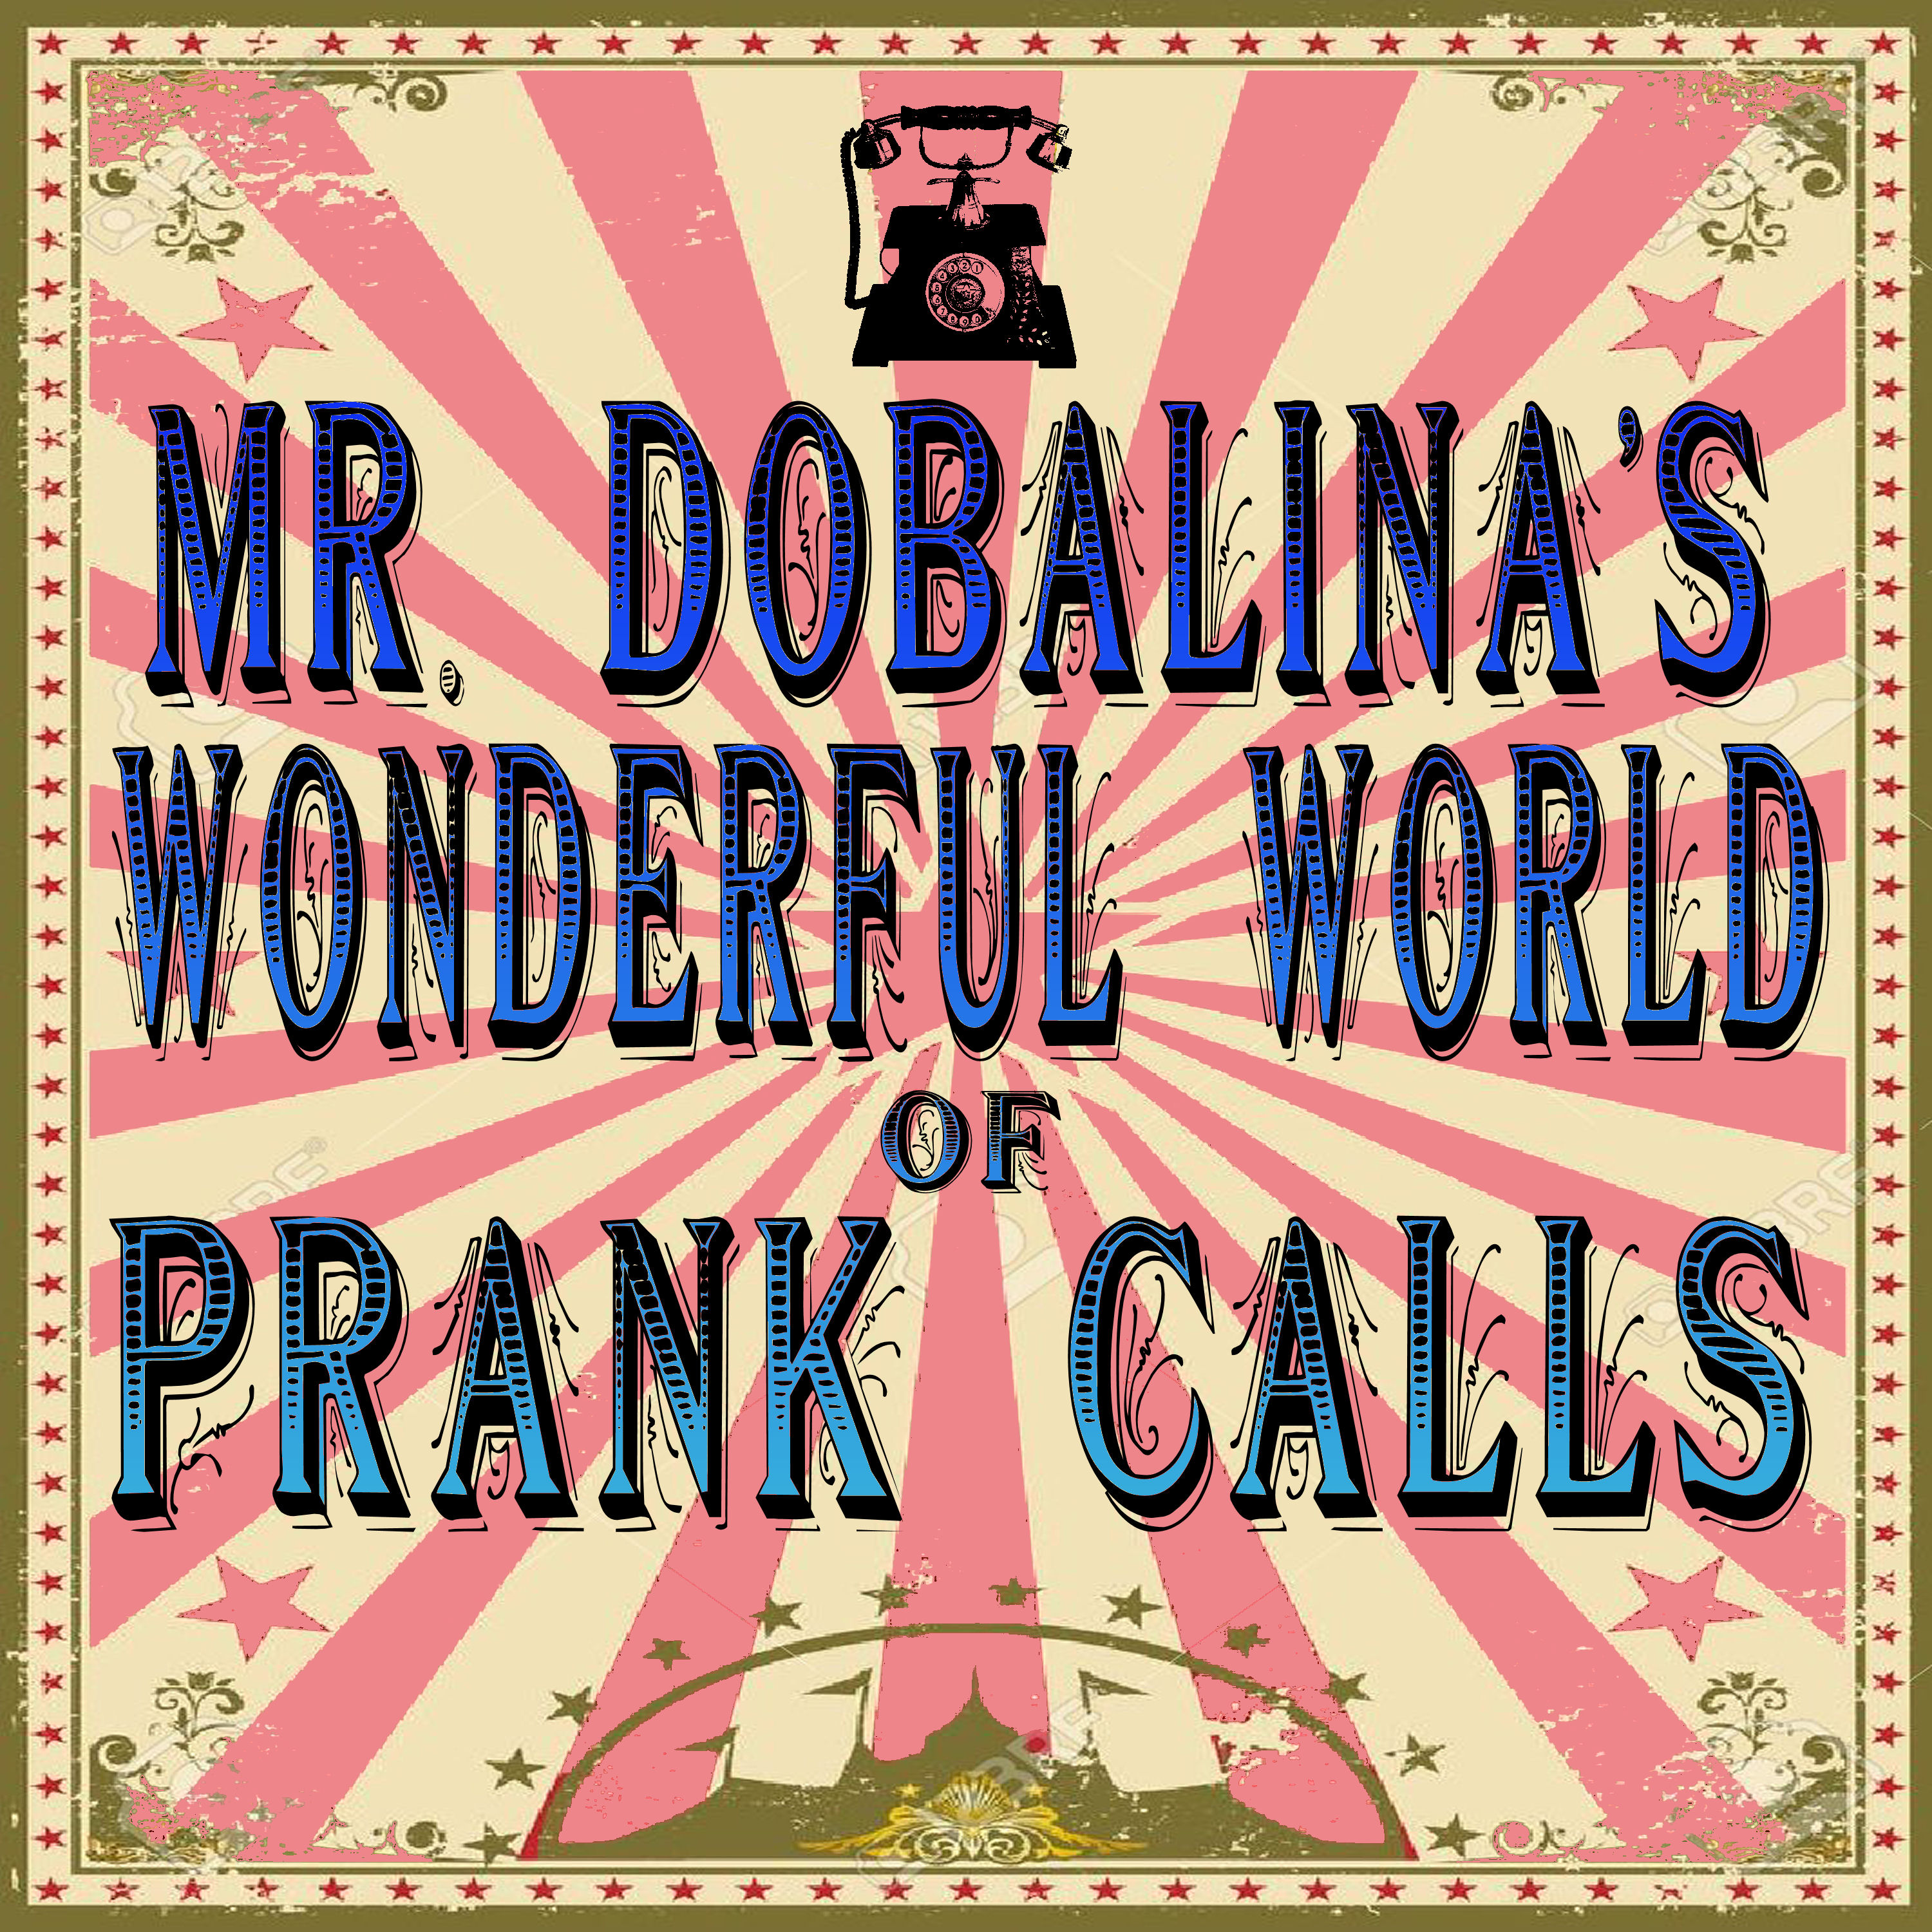 World of Prank Calls